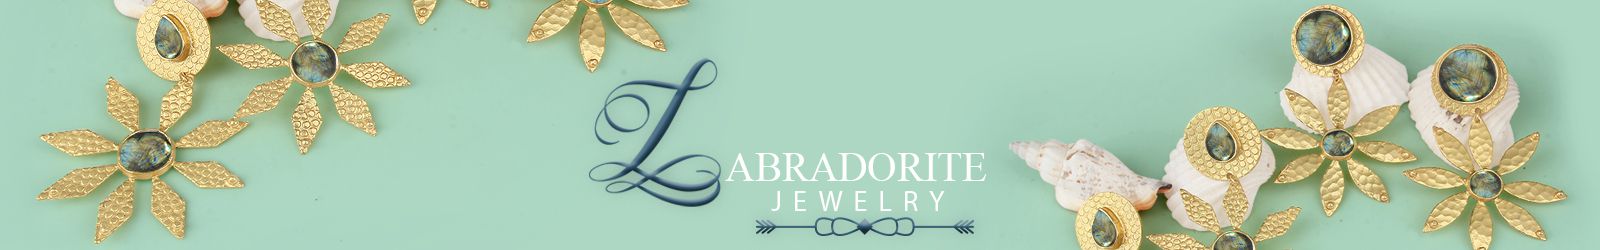 Silver Labradorite Jewelry Wholesale Supplier